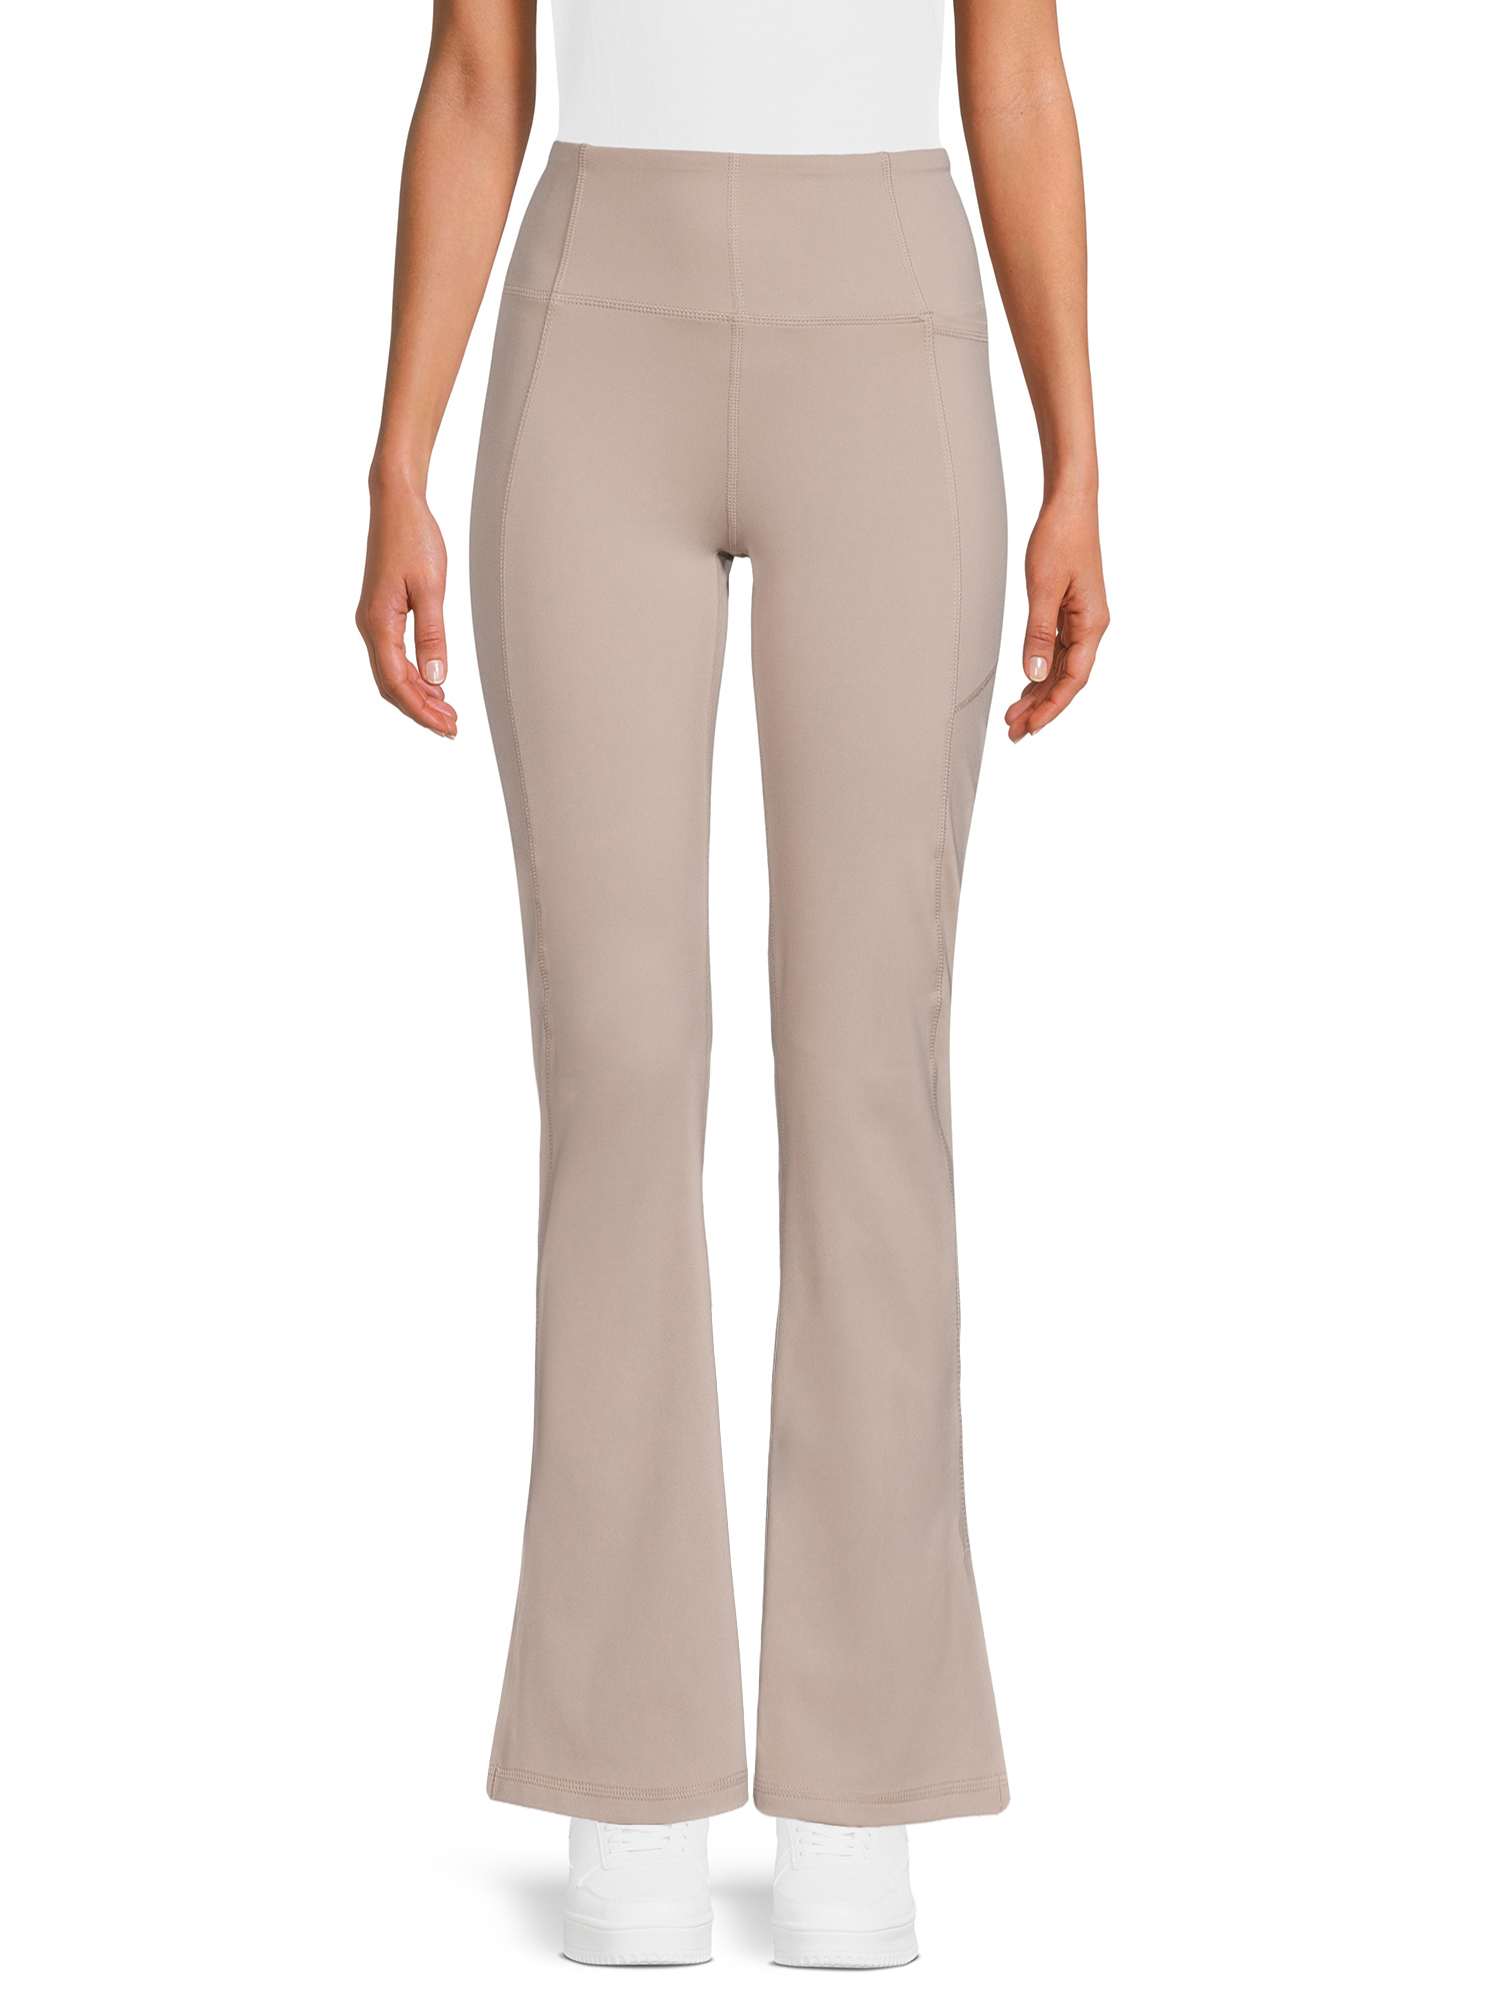 Avia Women's Flare Pants, Sizes XS-XXXL - Walmart.com